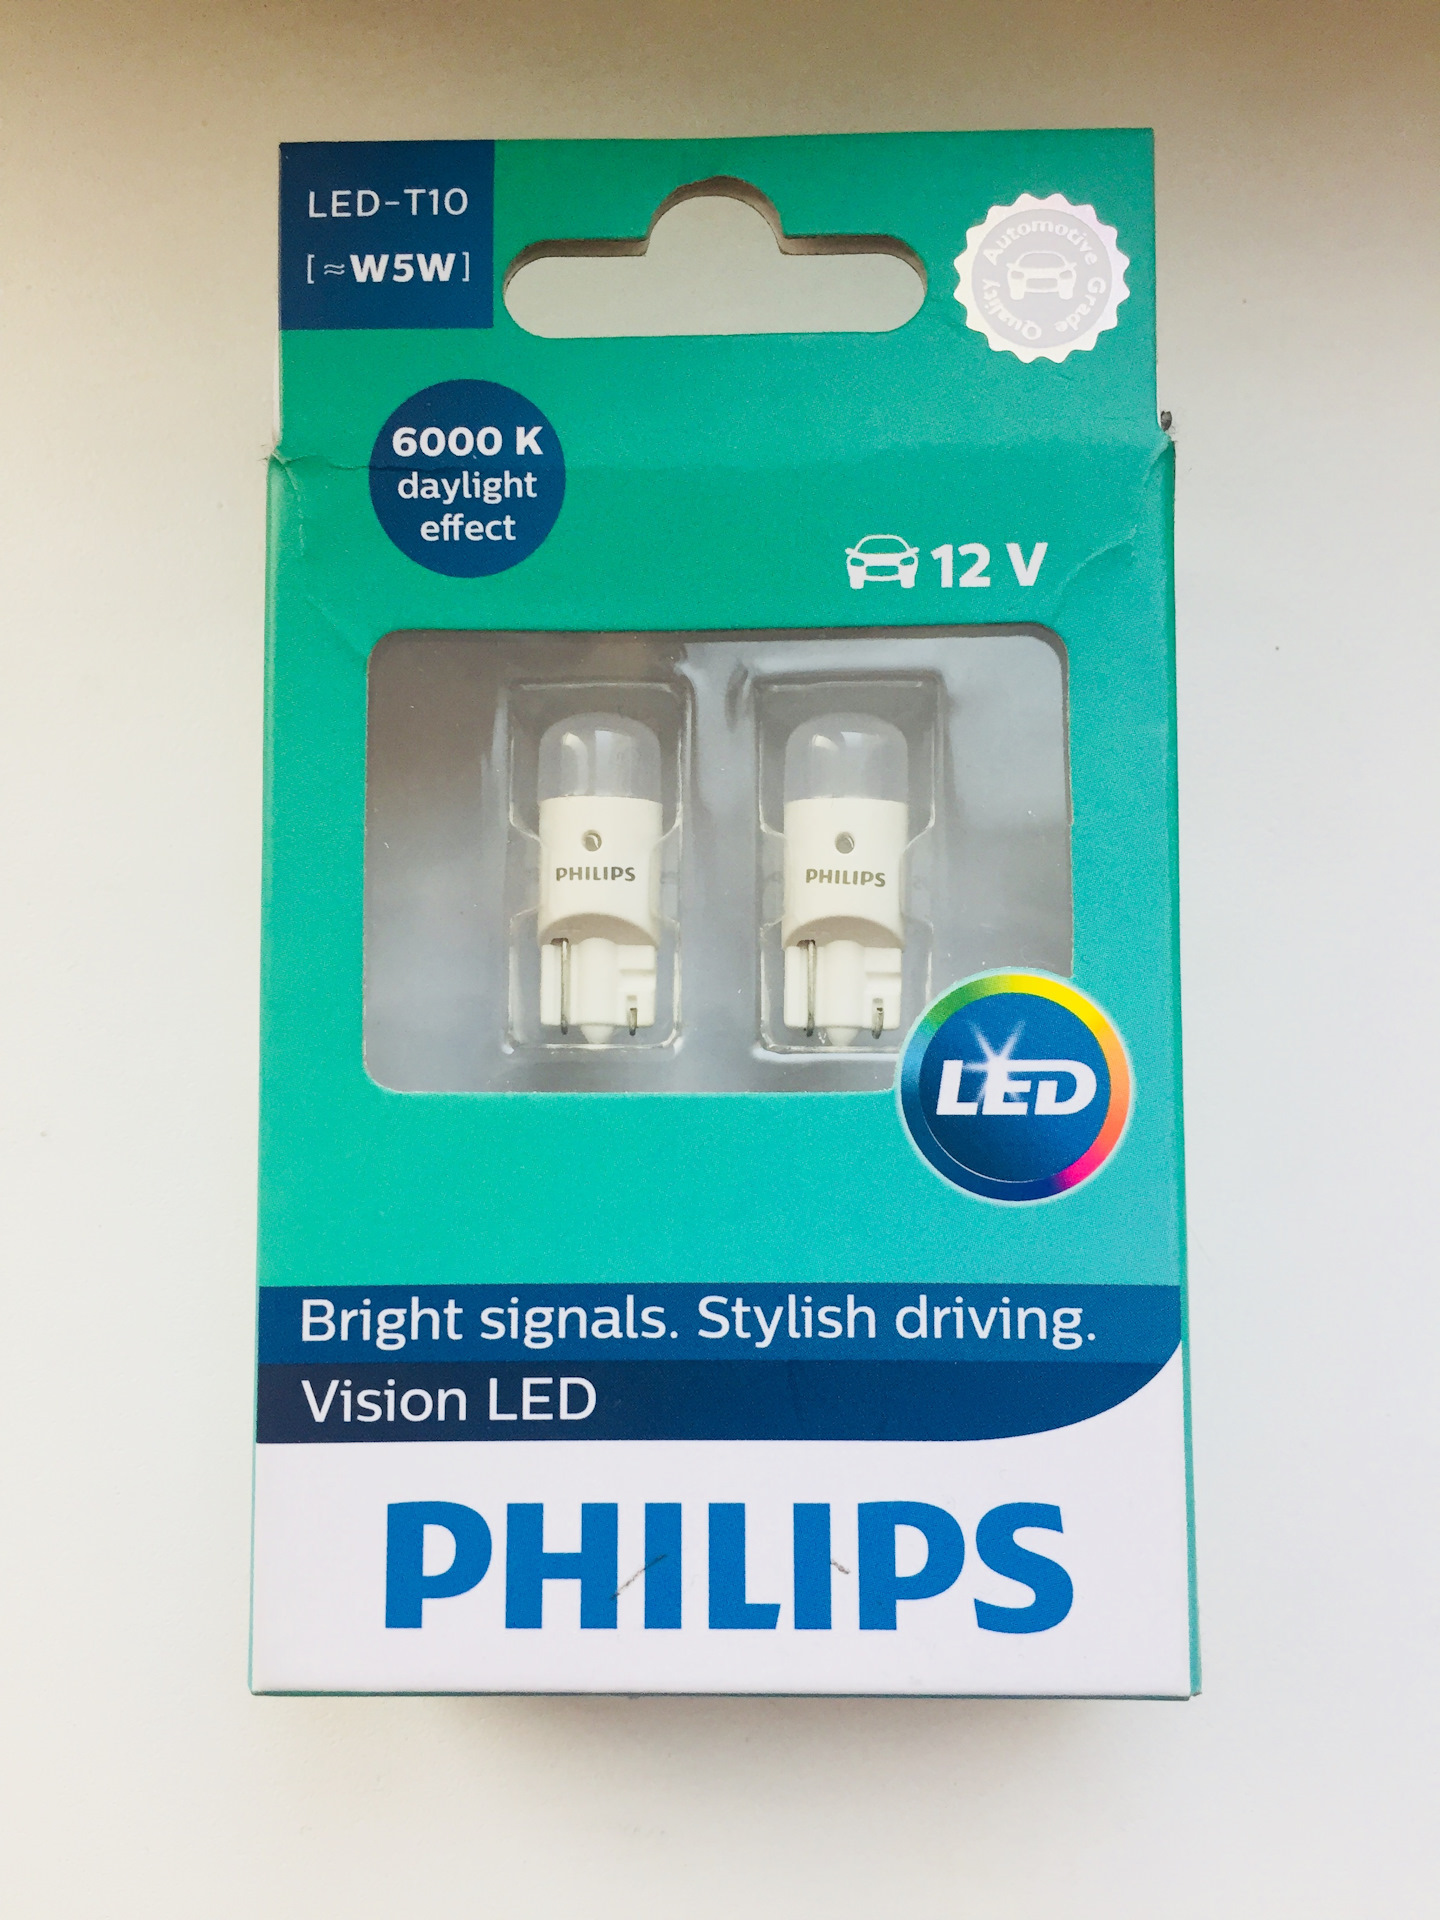 Габариты филипс. Philips led t10 w5w 6000k. Лампа t10 (w5w) 12v/5w Philips. Филипс лед т10 w5w. Габаритные светодиодные лампы т10 w5w Филипс 5500к.